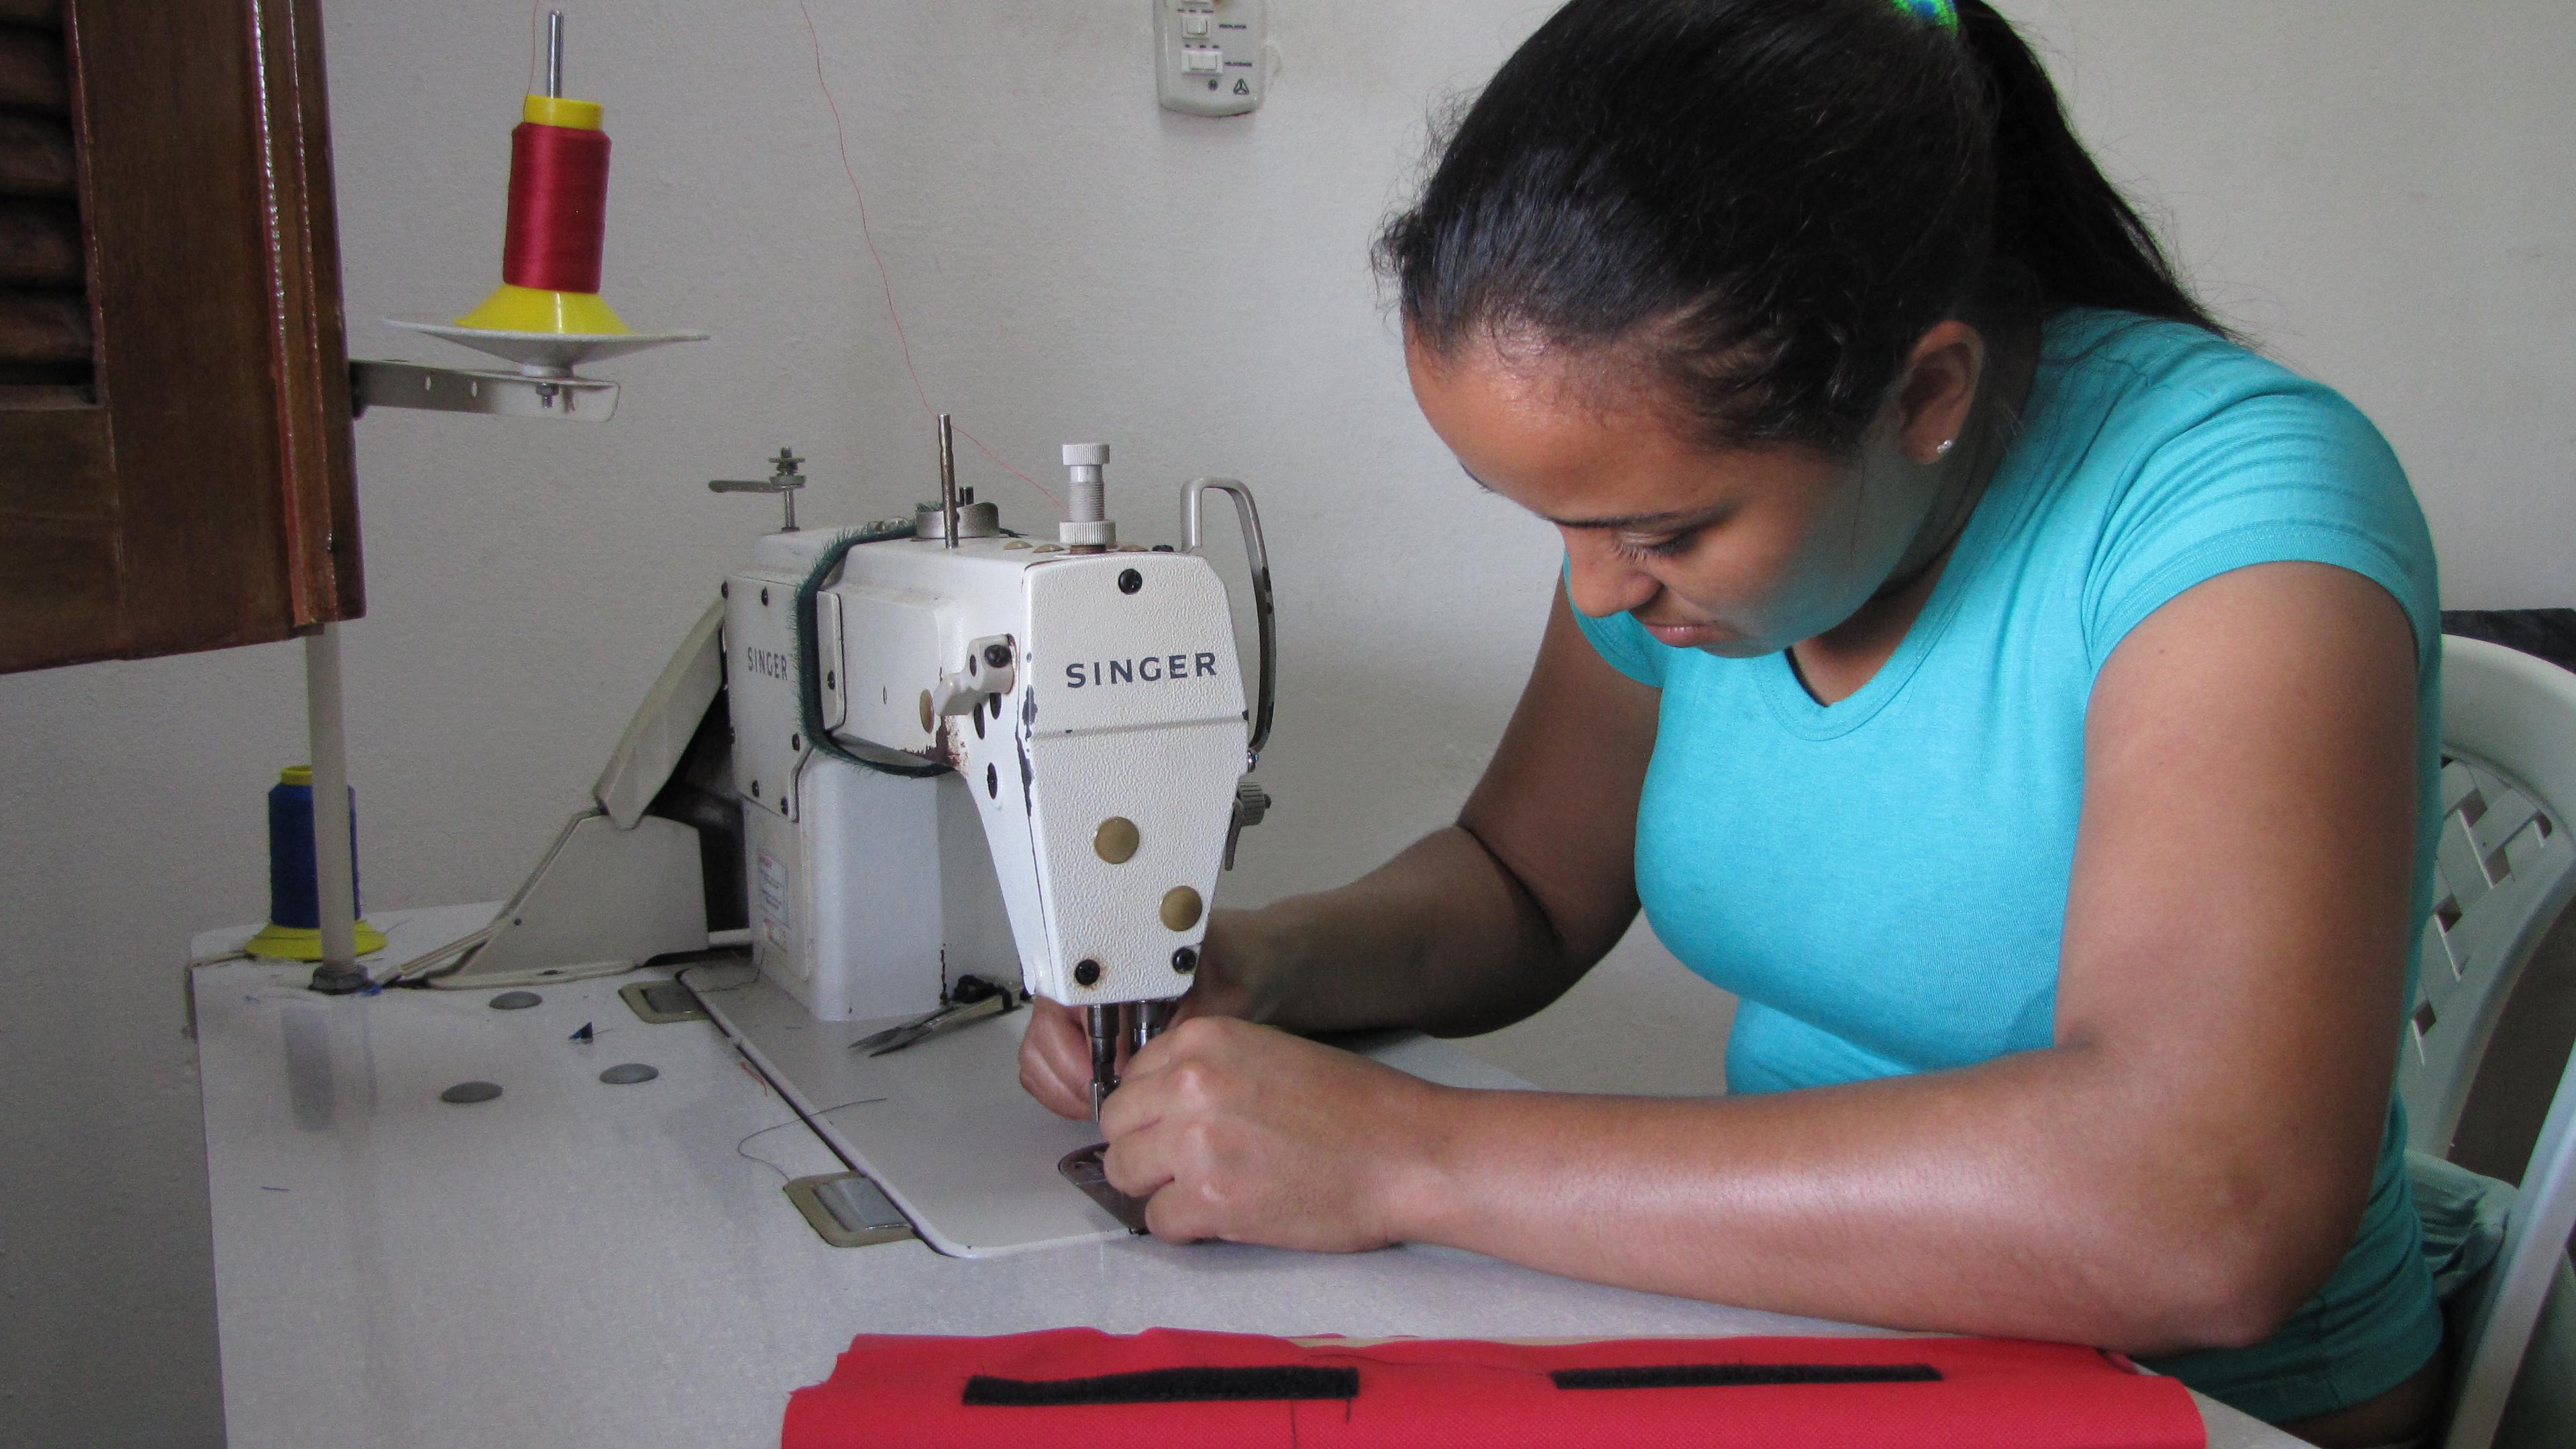 Projeto sewing class Brasil